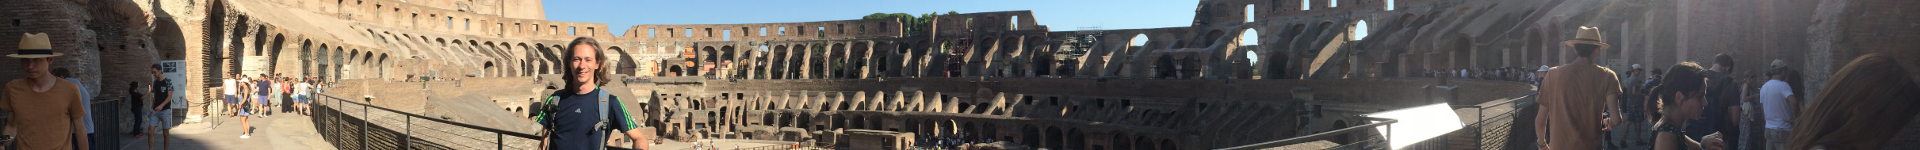 Colosseum - Roma, Italia